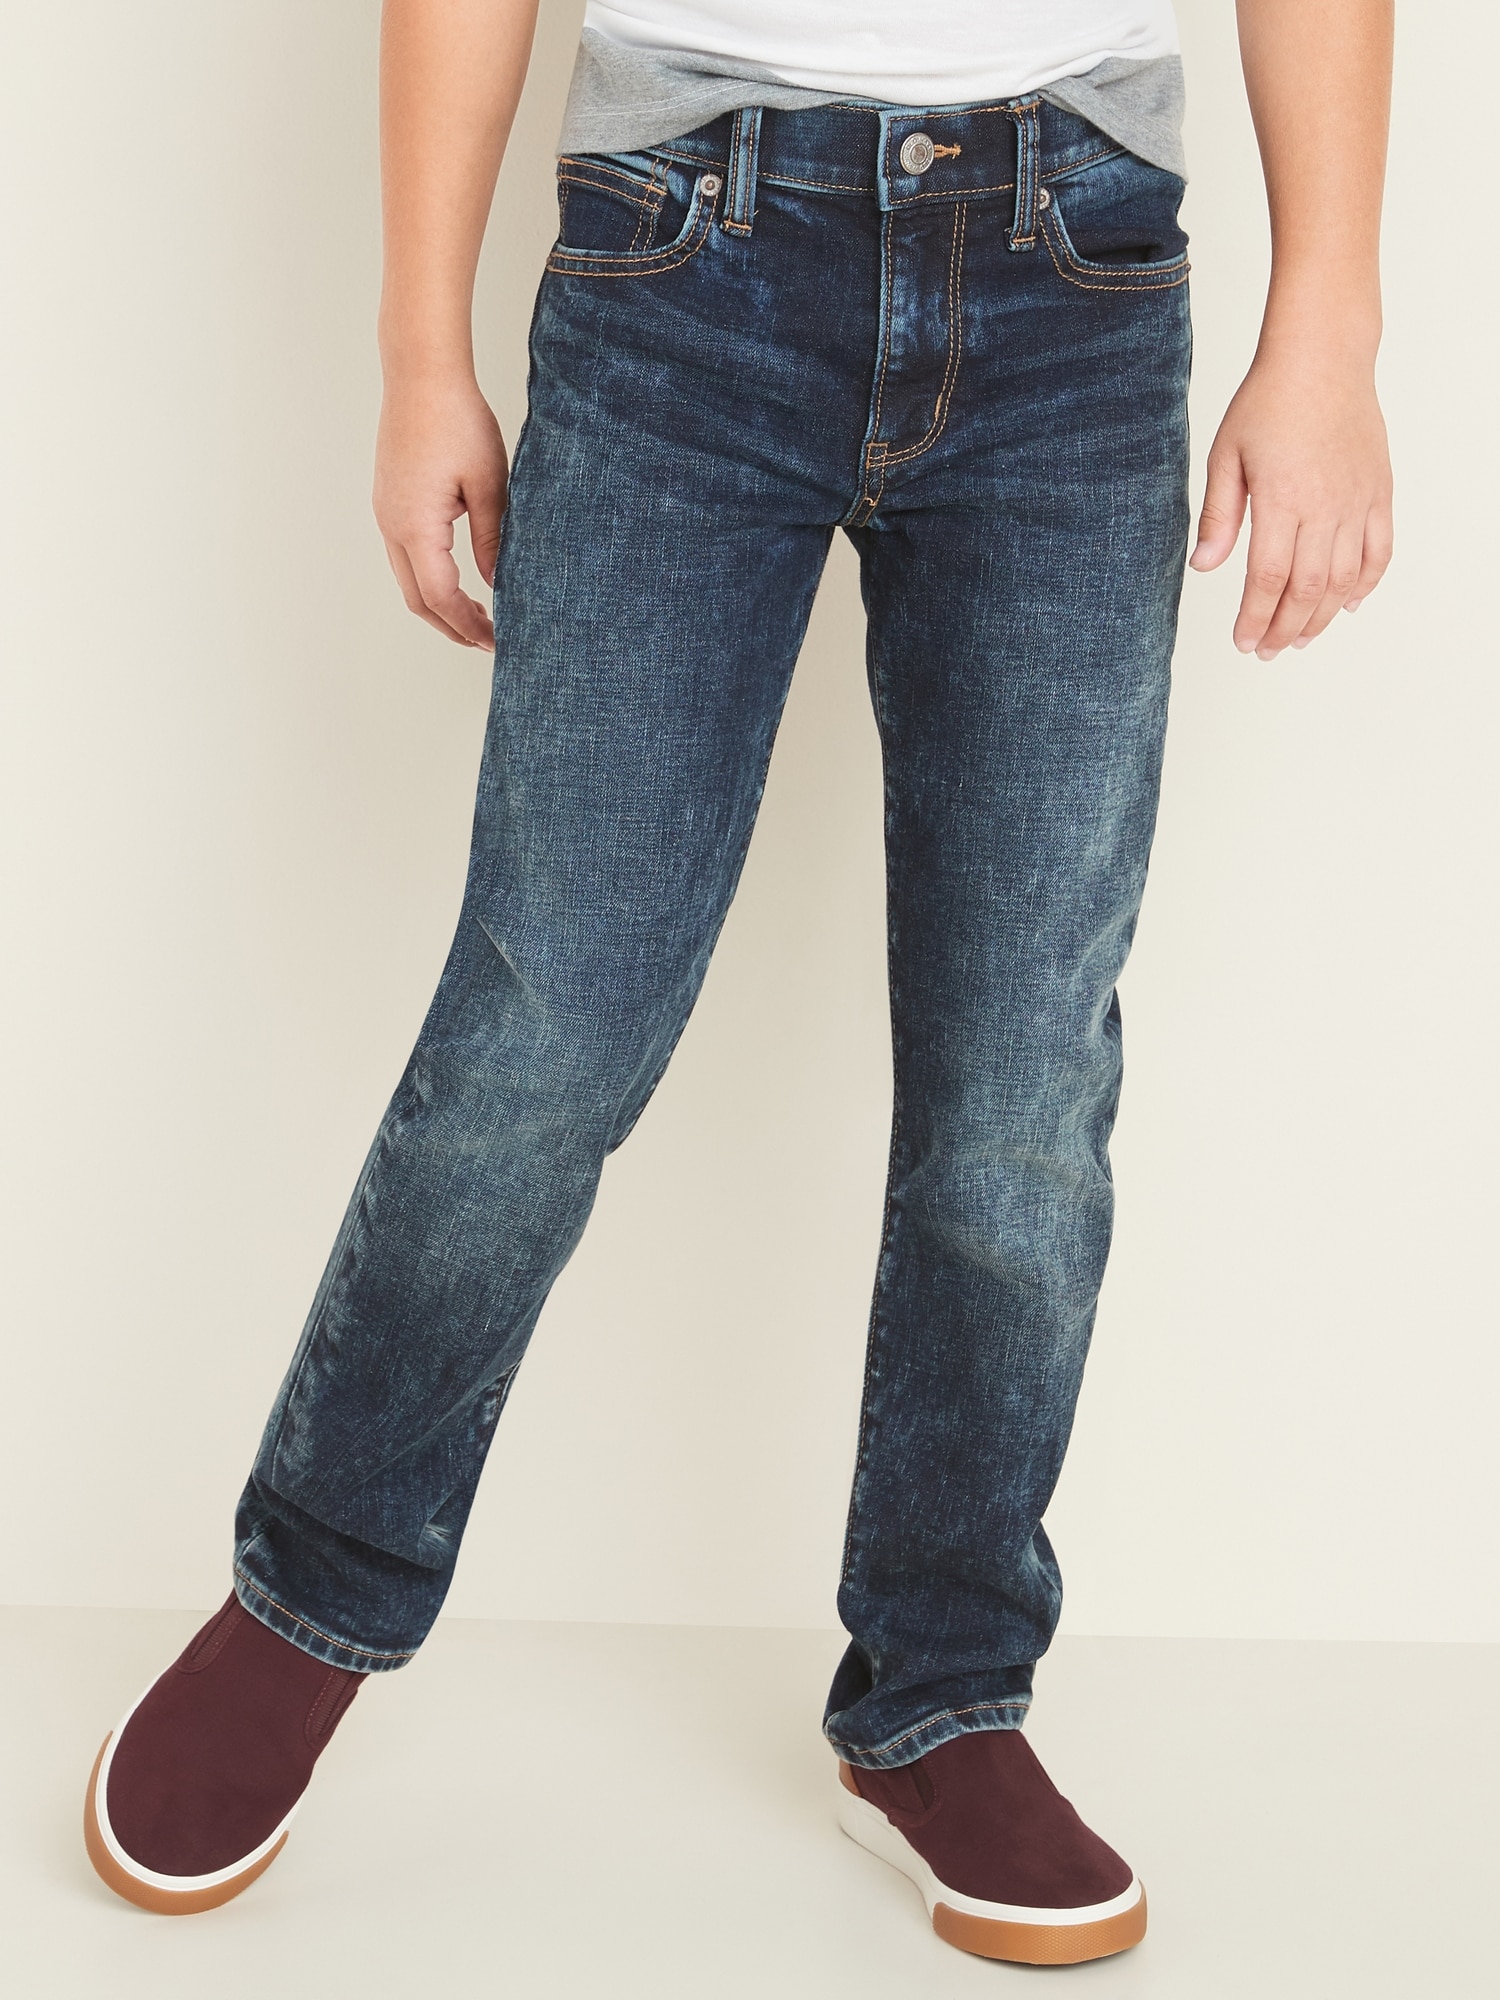 anker jeans for boy